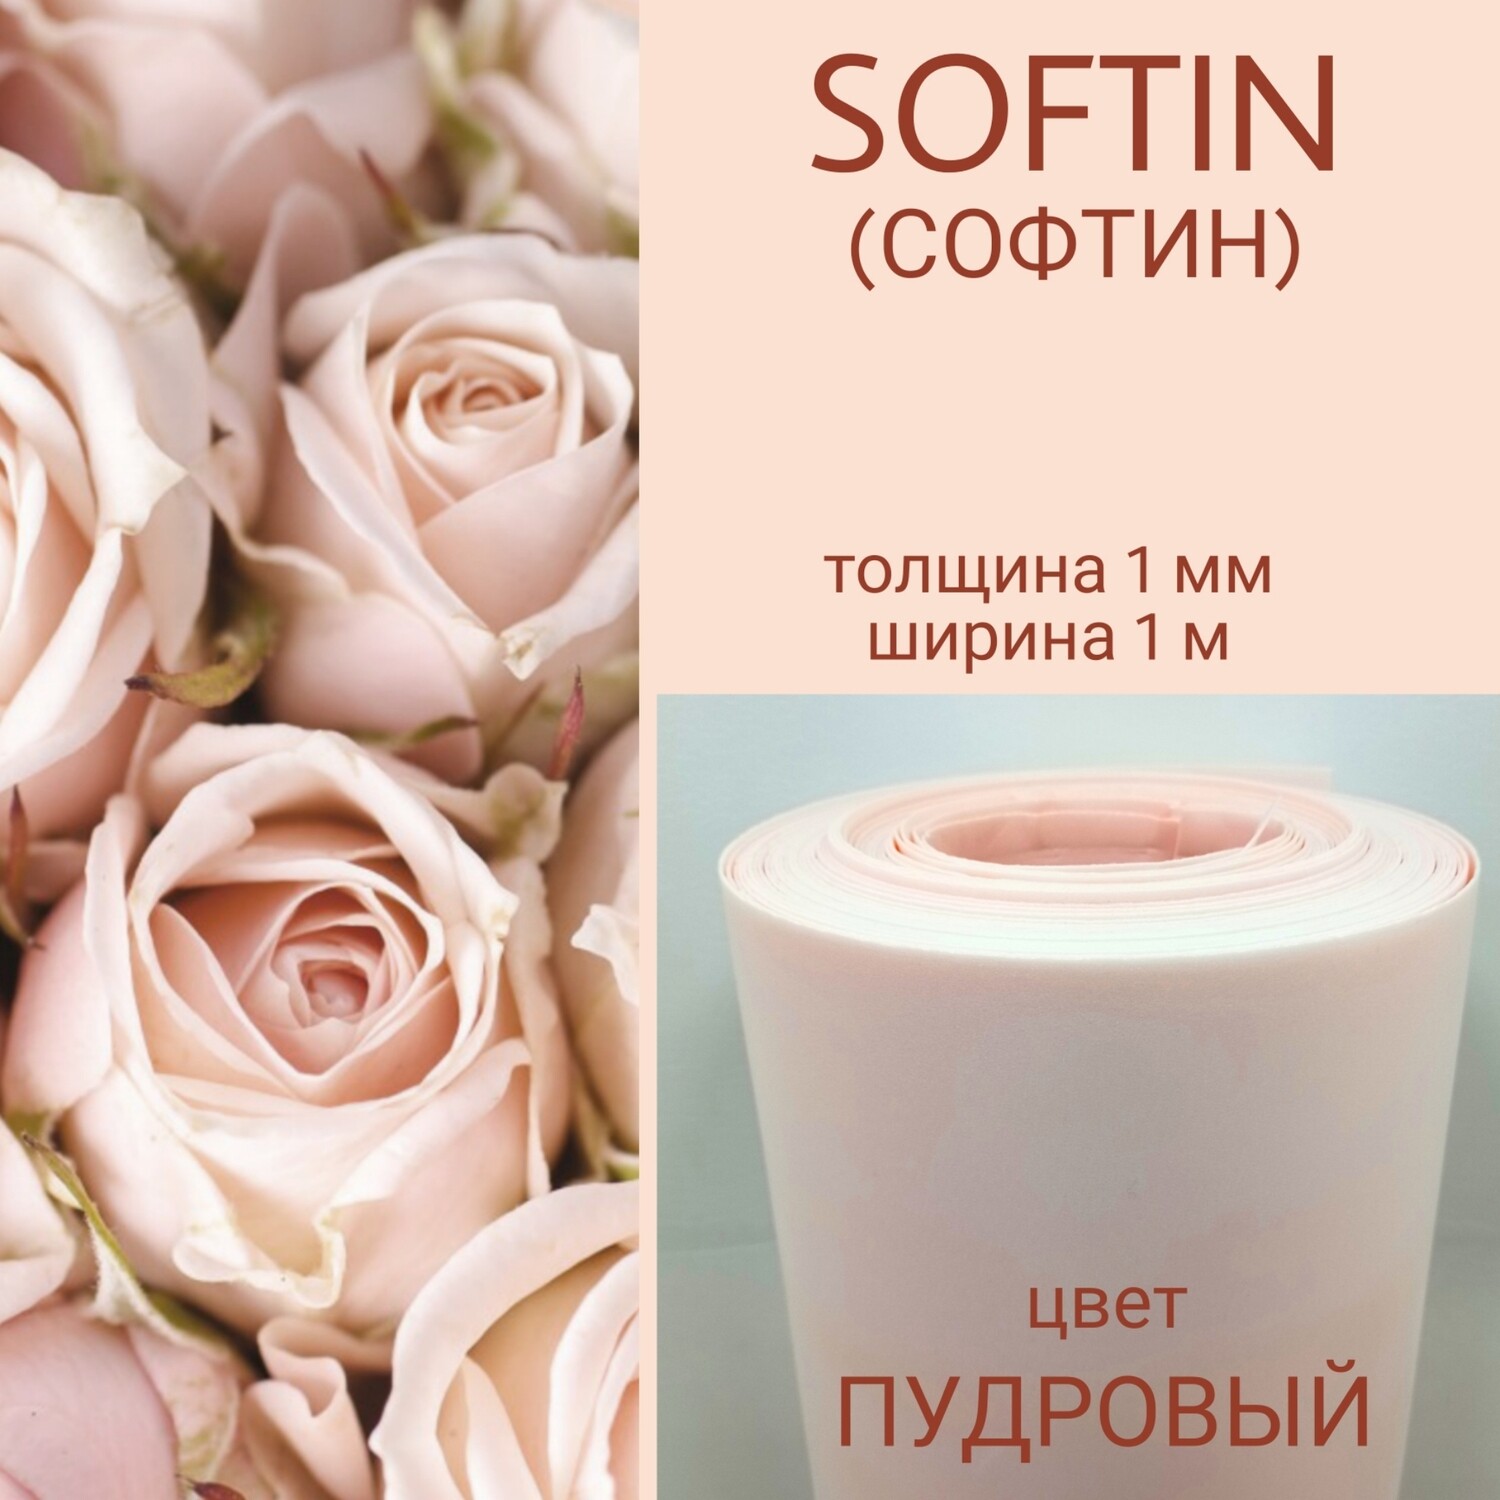 СОФТИН (SOFTIN) - аналог ИЗОЛОНА ППЭ, цвет - ПУДРОВЫЙ, толщина 1 мм, ширина 1 метр (цена за 1 метр)